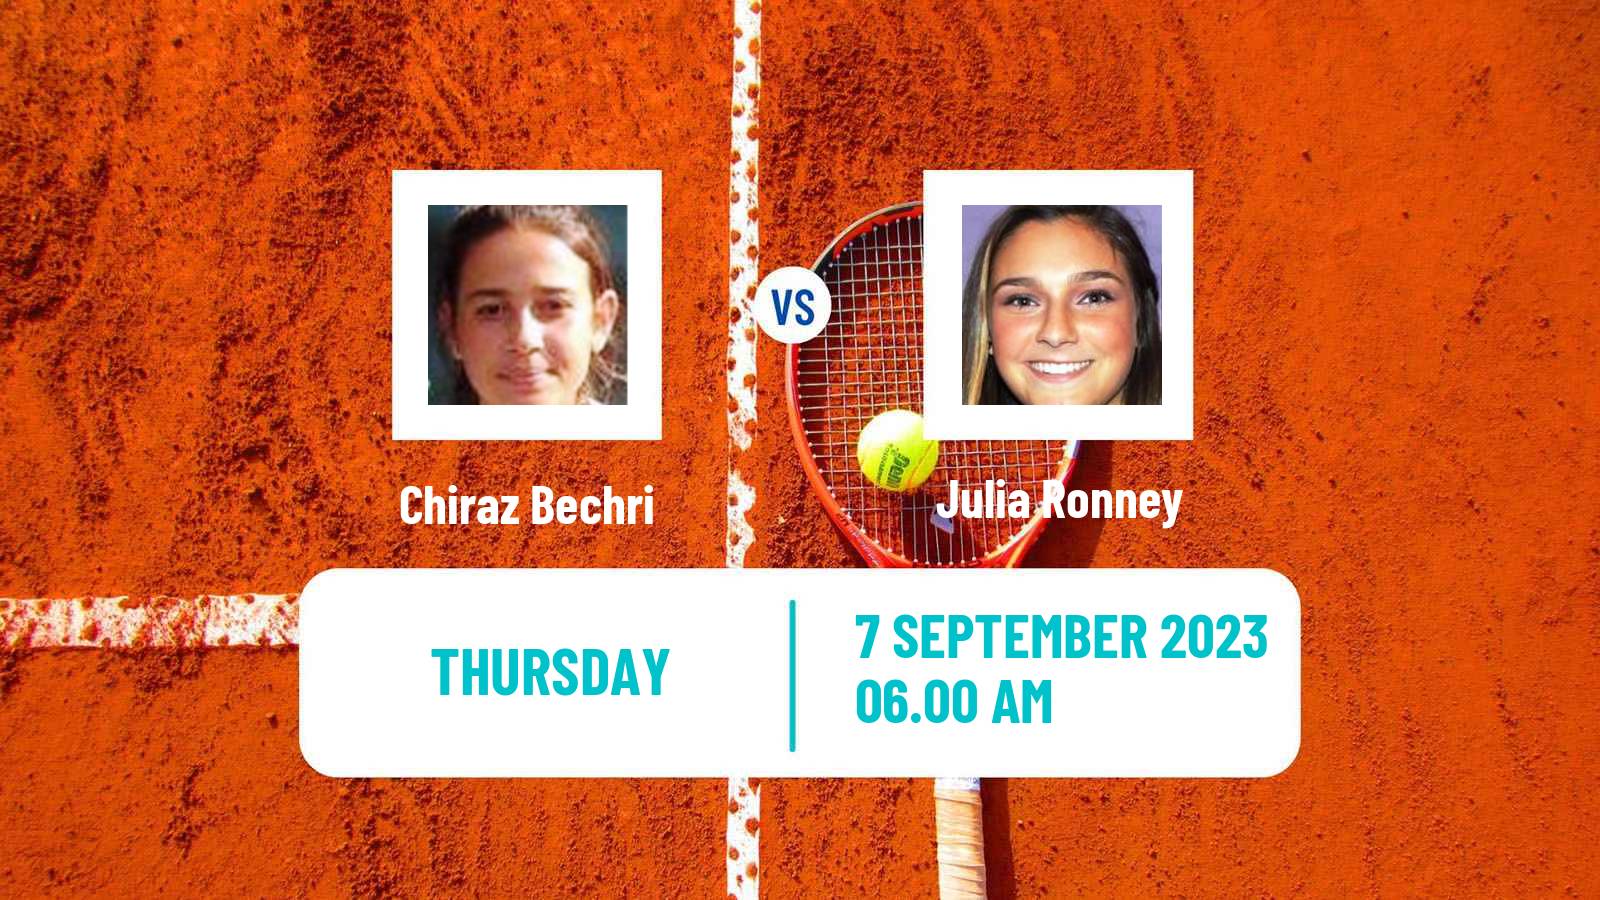 Tennis ITF W15 Monastir 31 Women Chiraz Bechri - Julia Ronney